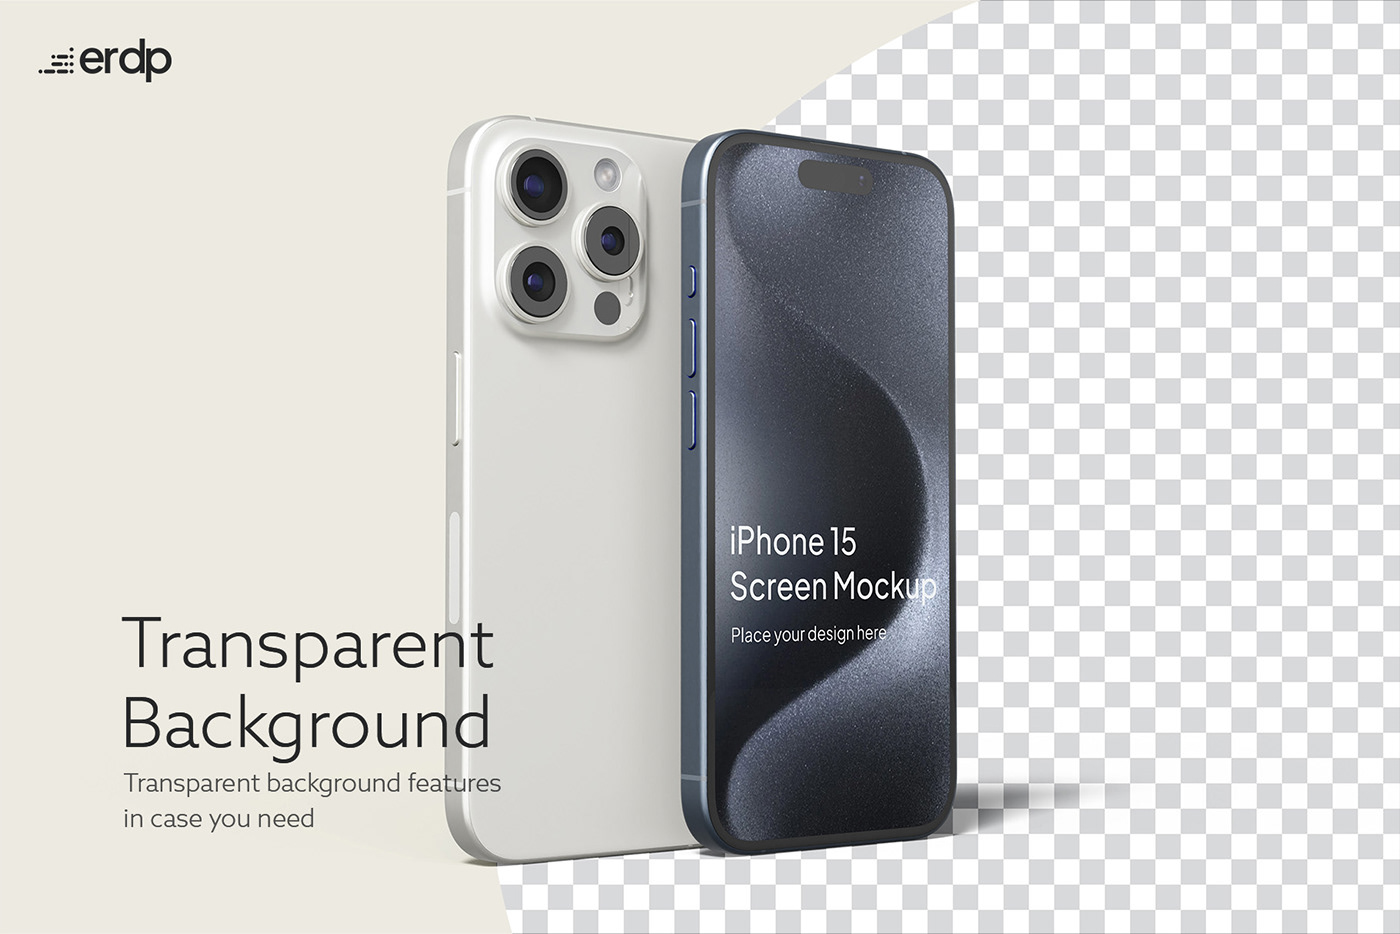 iphone Mockup app showcase Display screen phone mockup iphone mockup iphone 15 iphone 15 mockup